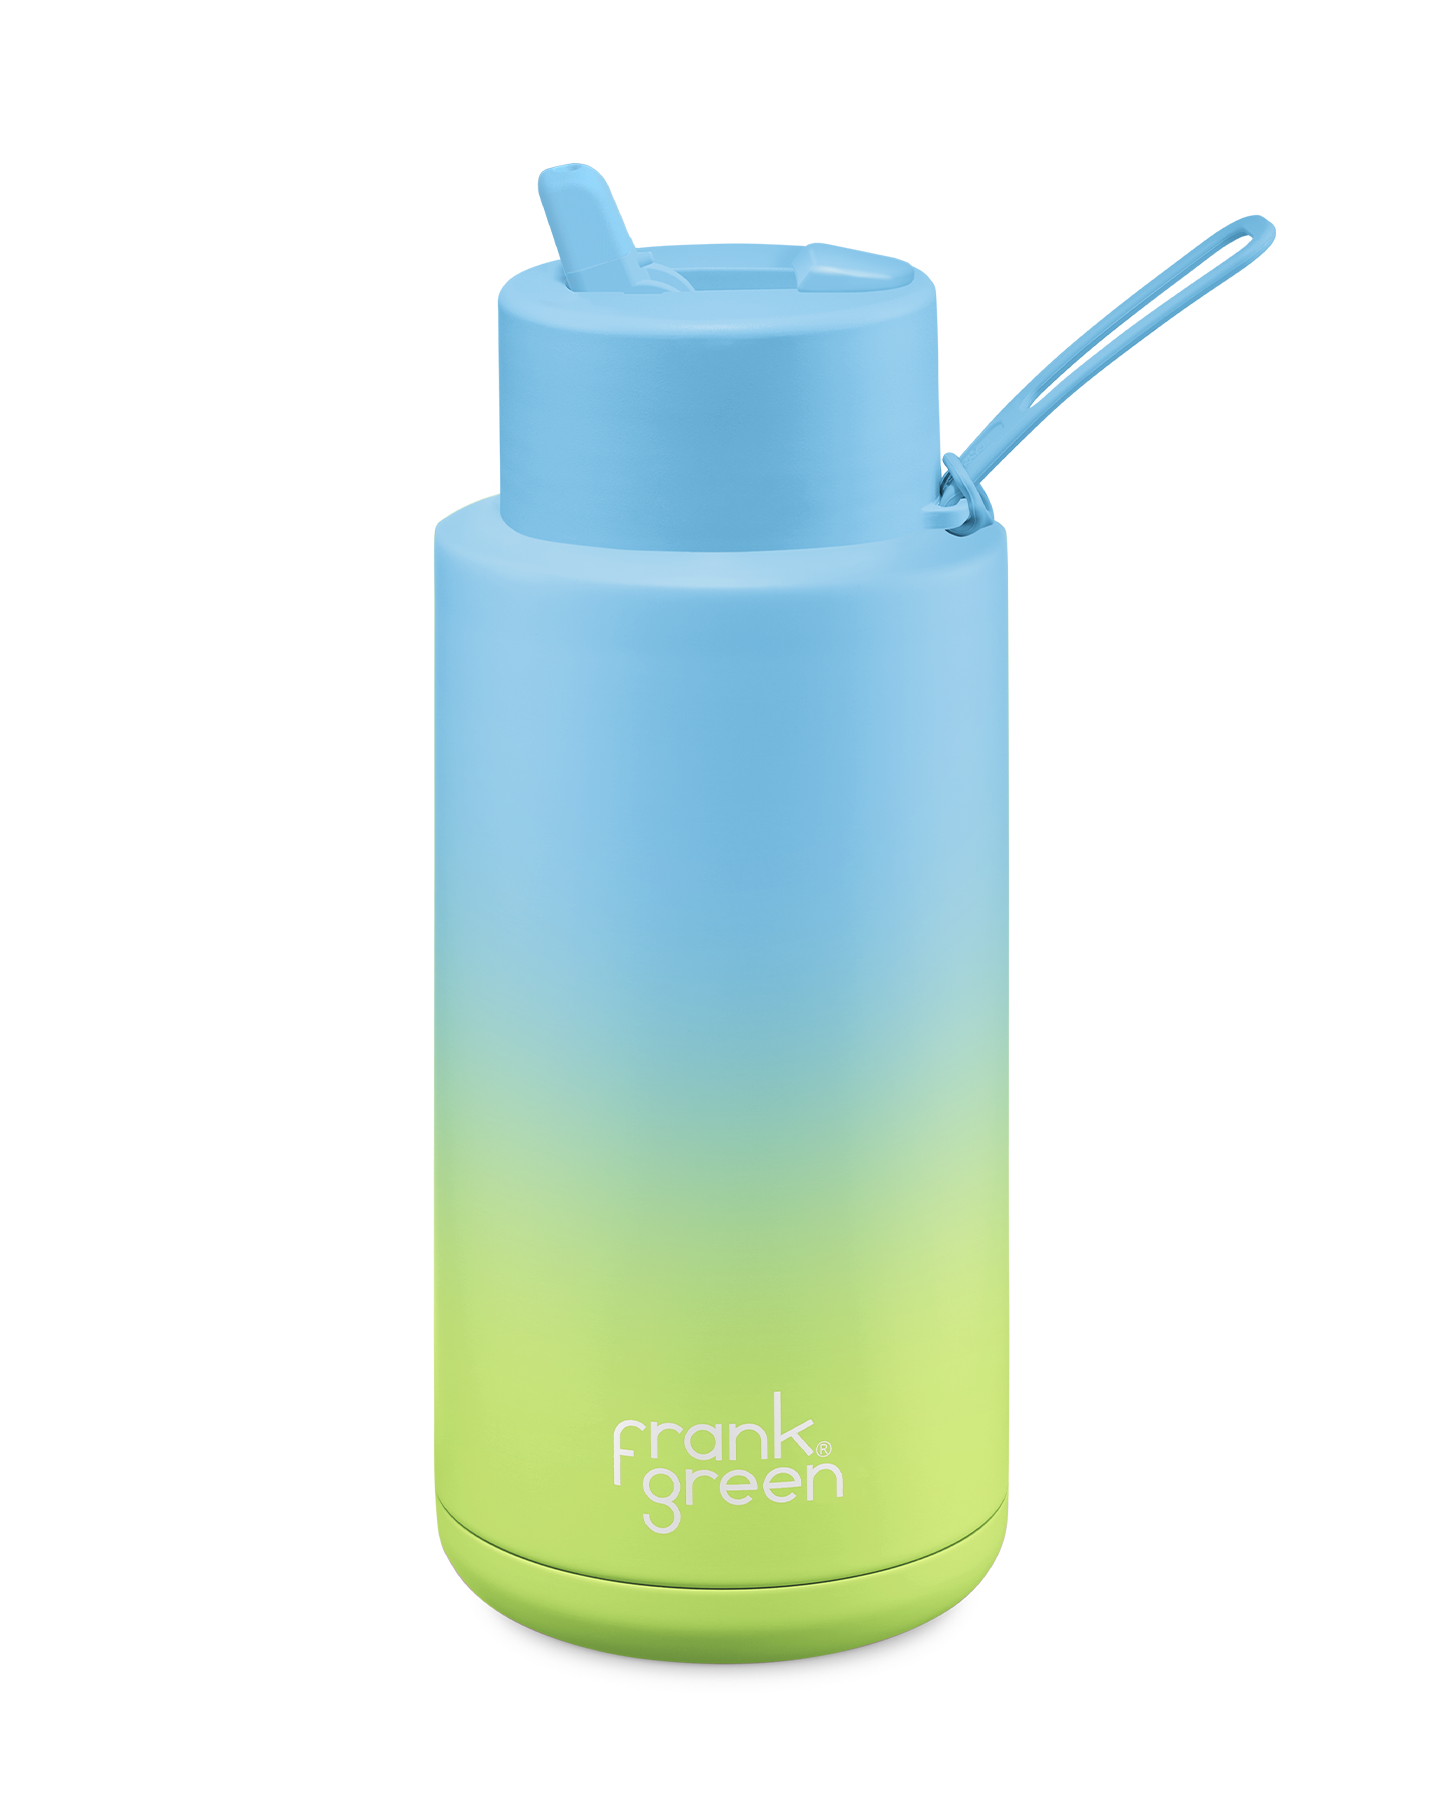 Frank Green Gradient Ceramic Reusable Bottle 34oz/1 LITRE WITH STRAW LID - Sky Blue/Pistachio Green